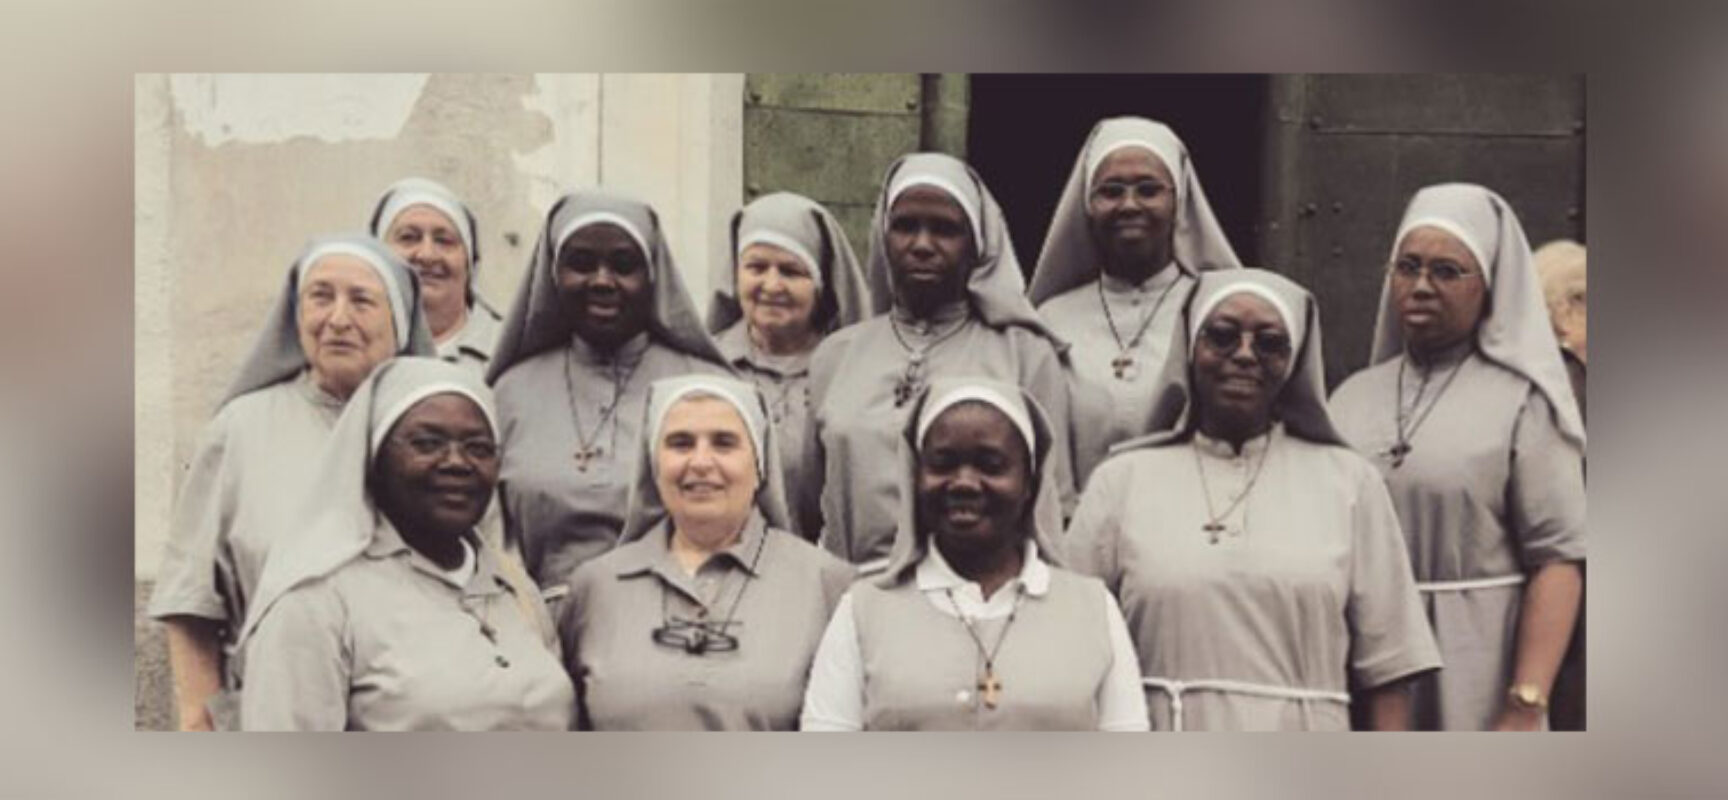 A Bisceglie giunge una nuova comunità di Suore Francescane